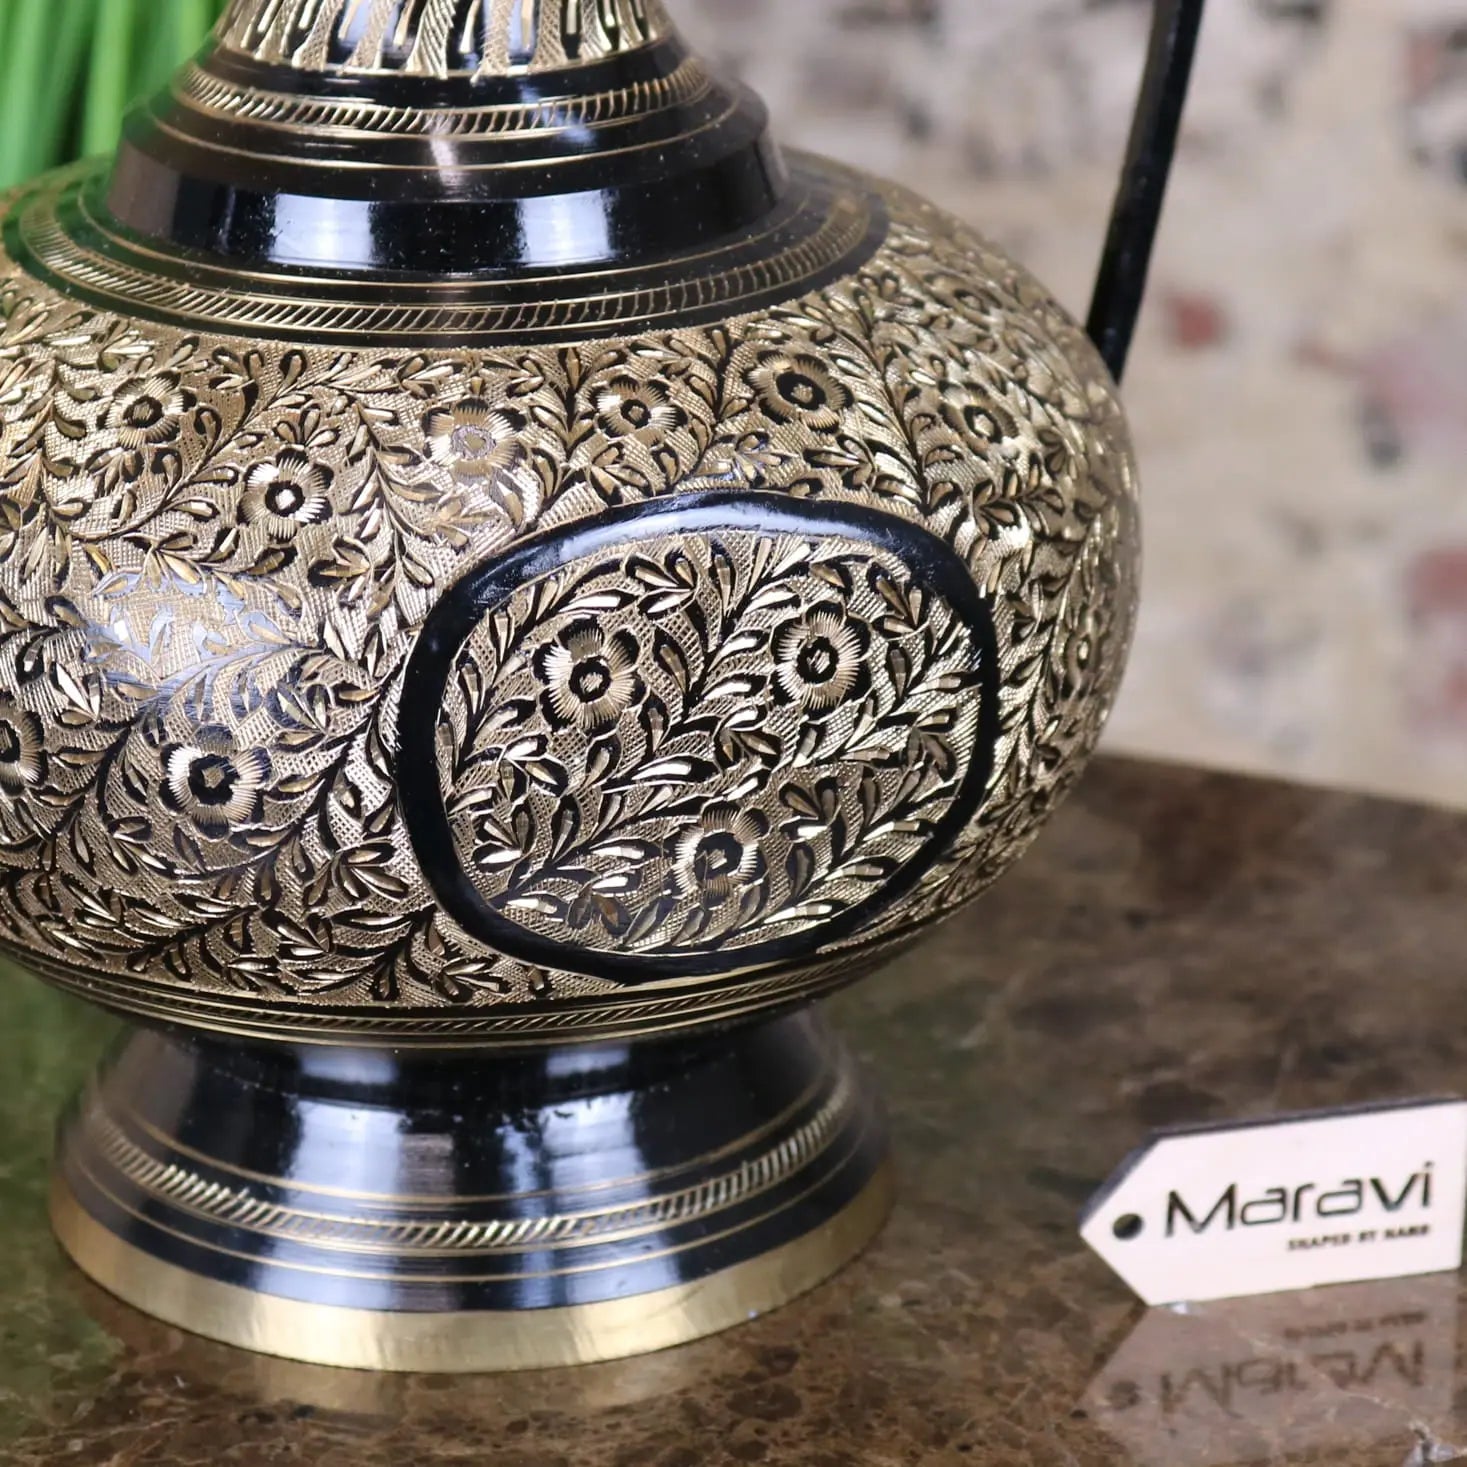 Aravalli Aftaba Brass Arabian Jug Vase Ornament  - Closeup of Engraving on Body